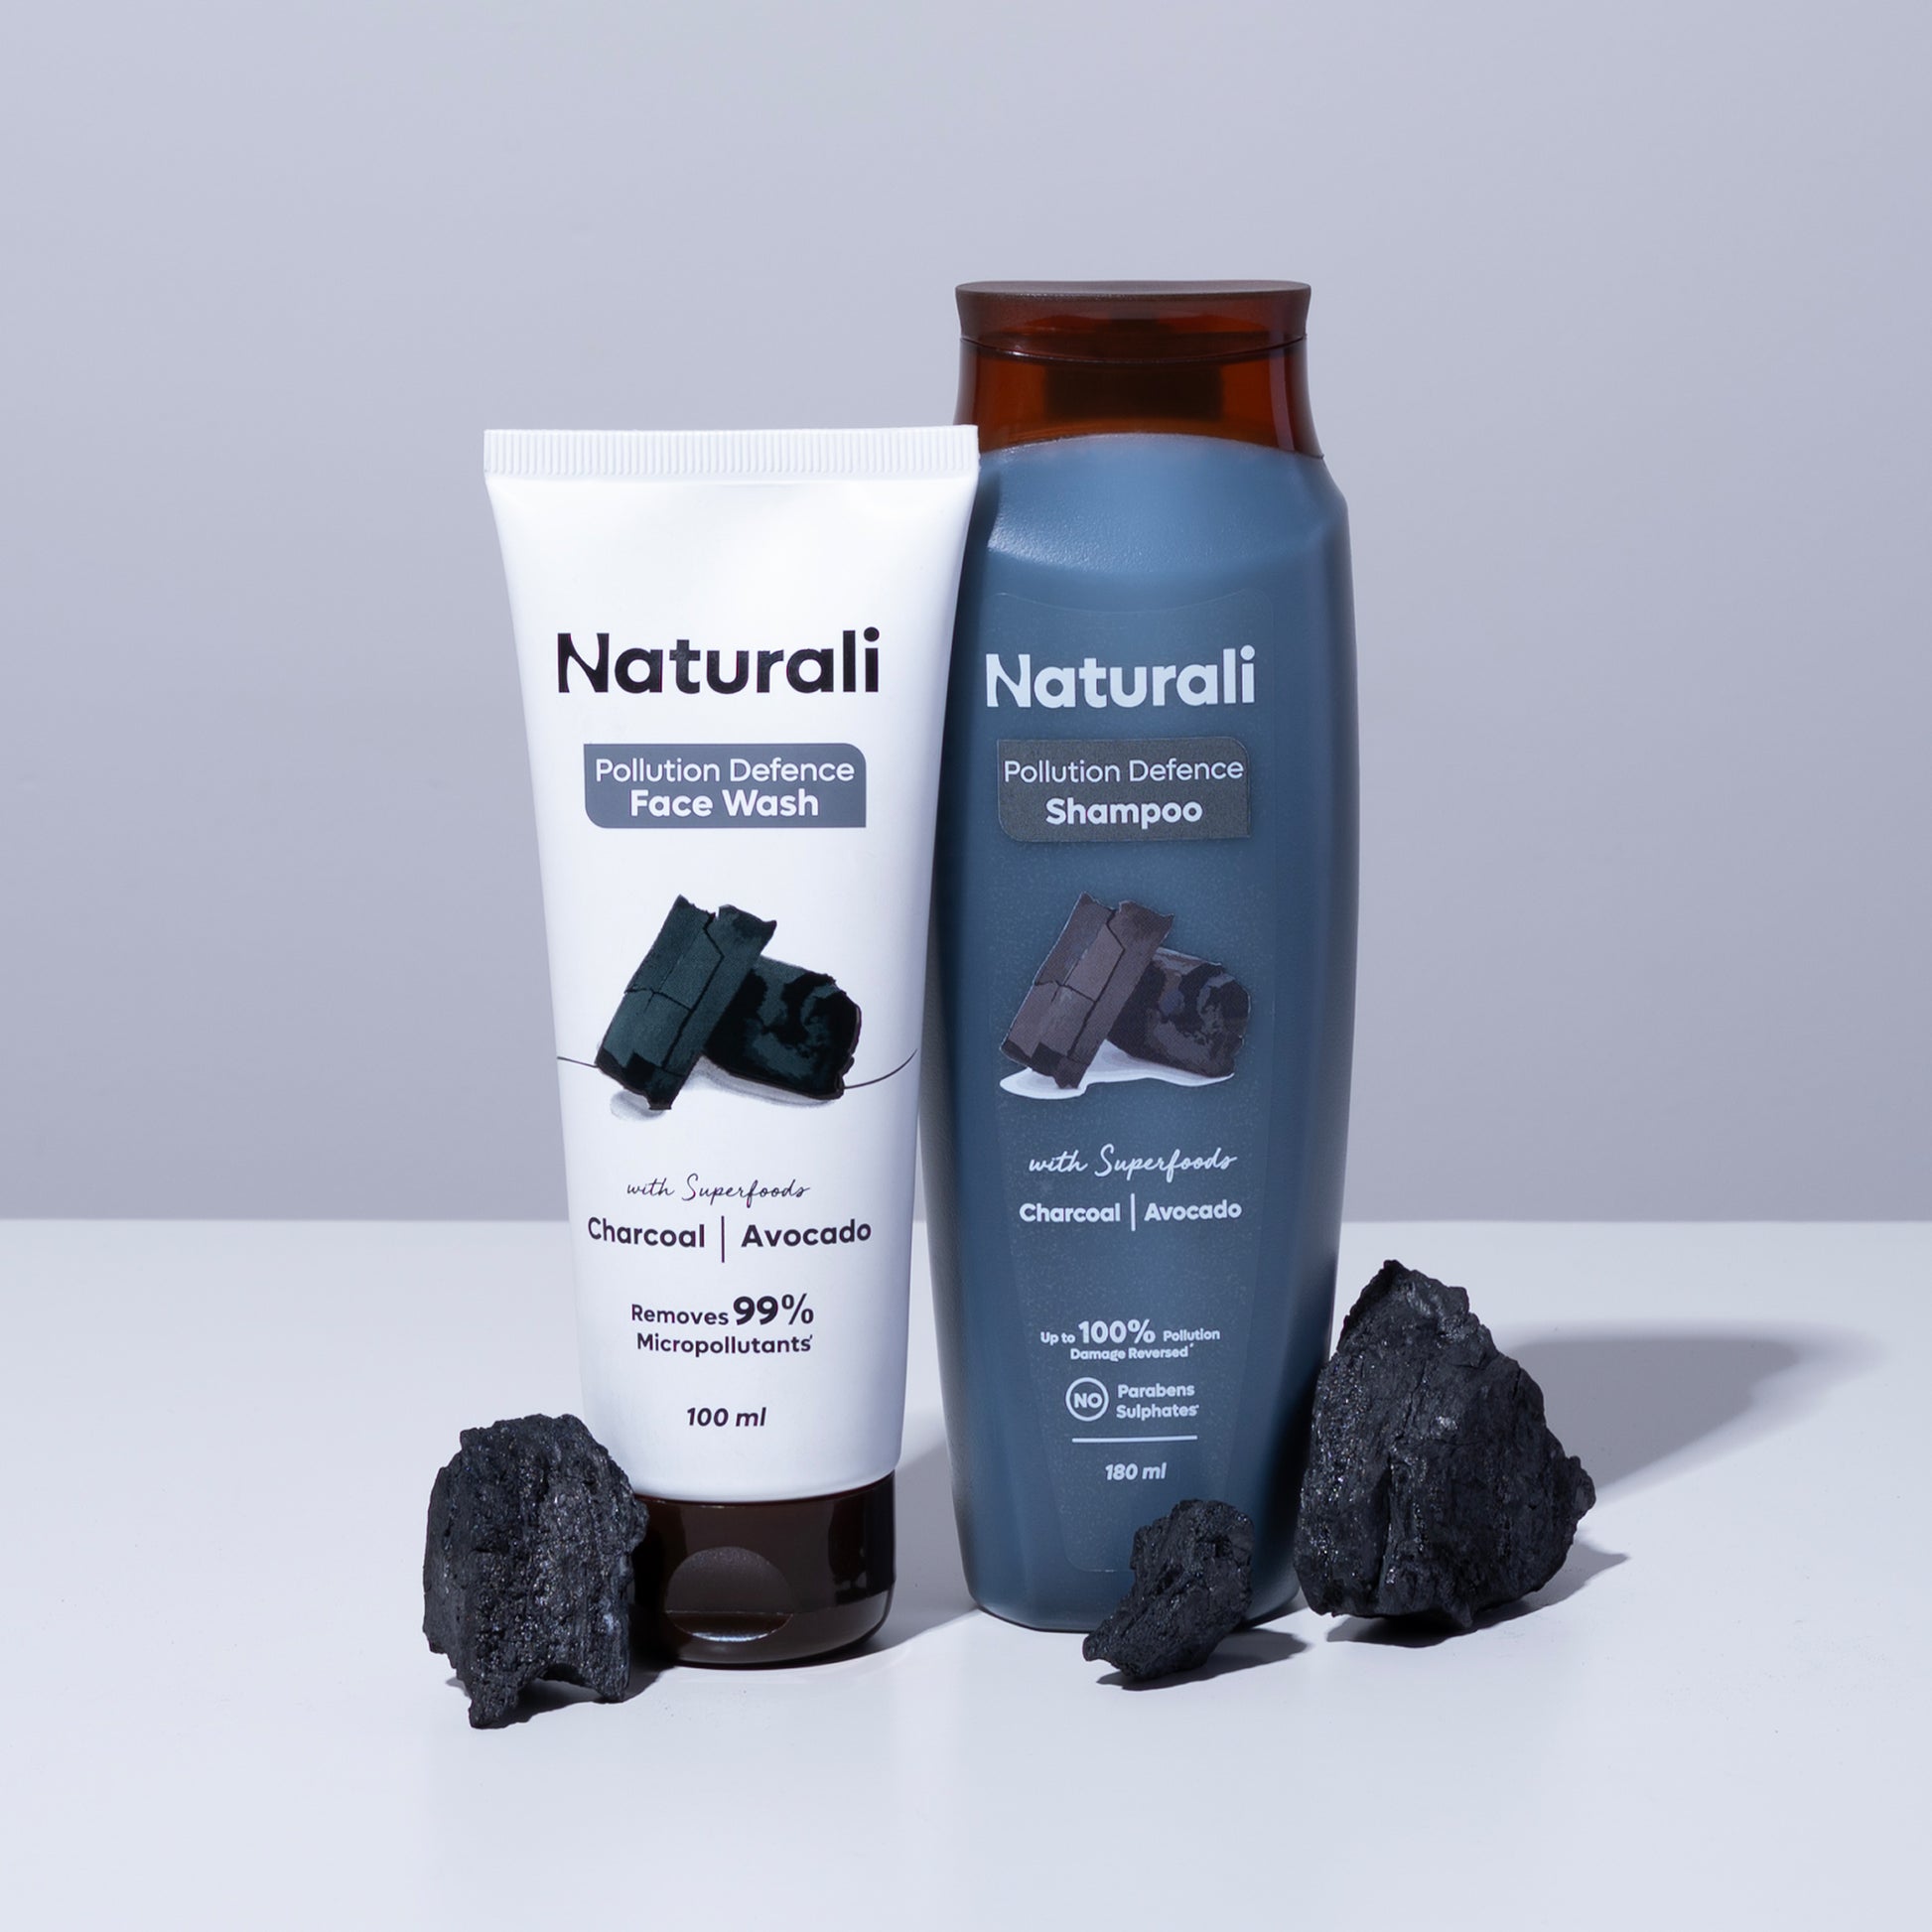 Naturali Pollution Defence Shampoo + Pollution Defence Facewash